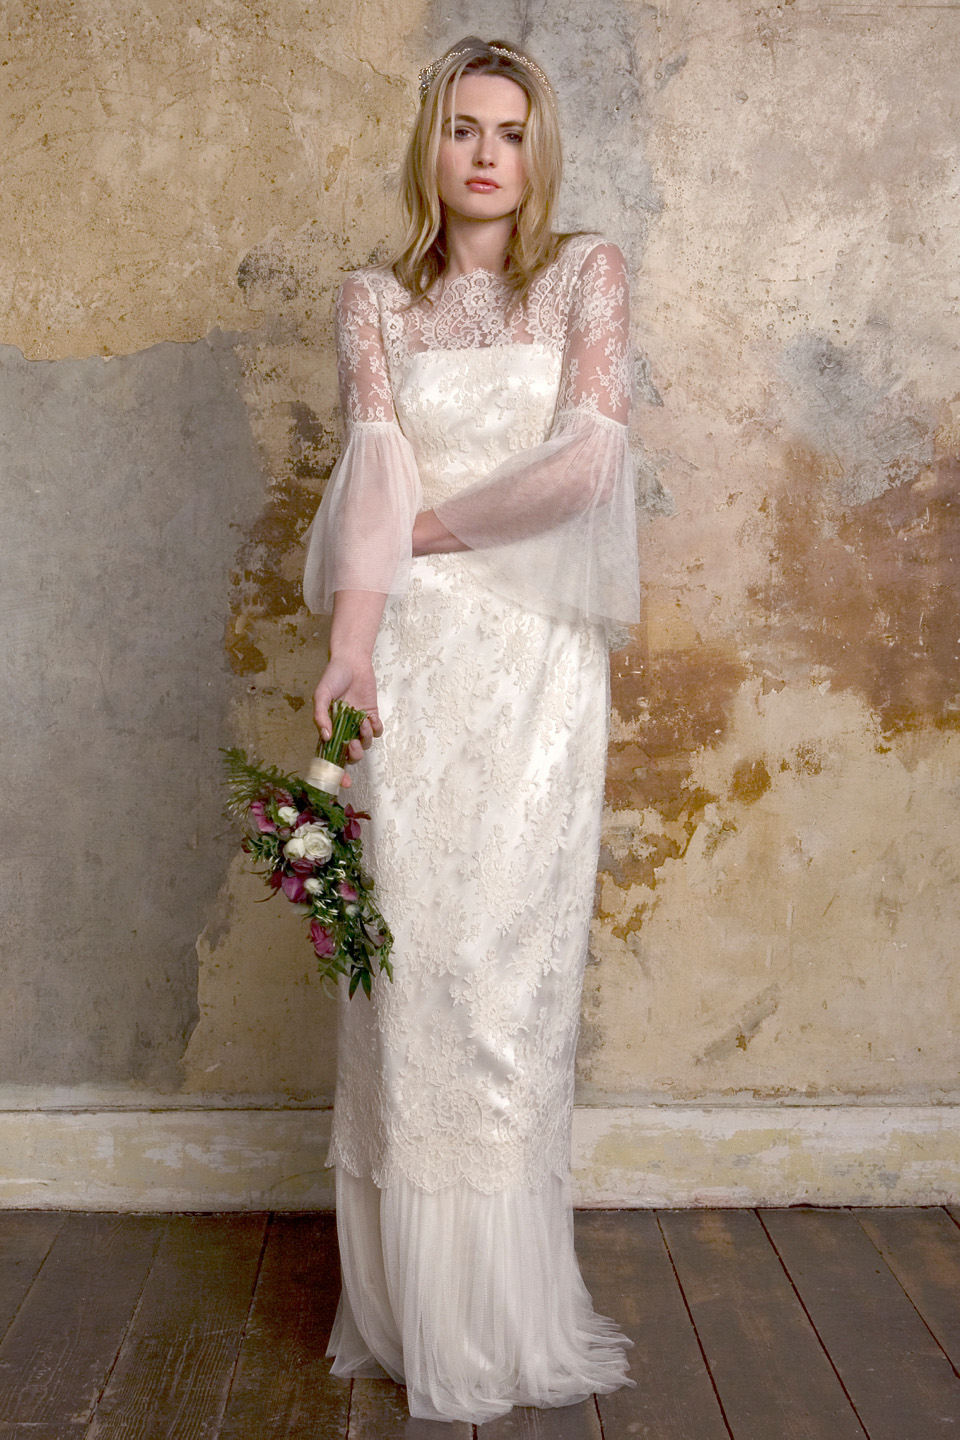 sally lacock, modern vintage bride